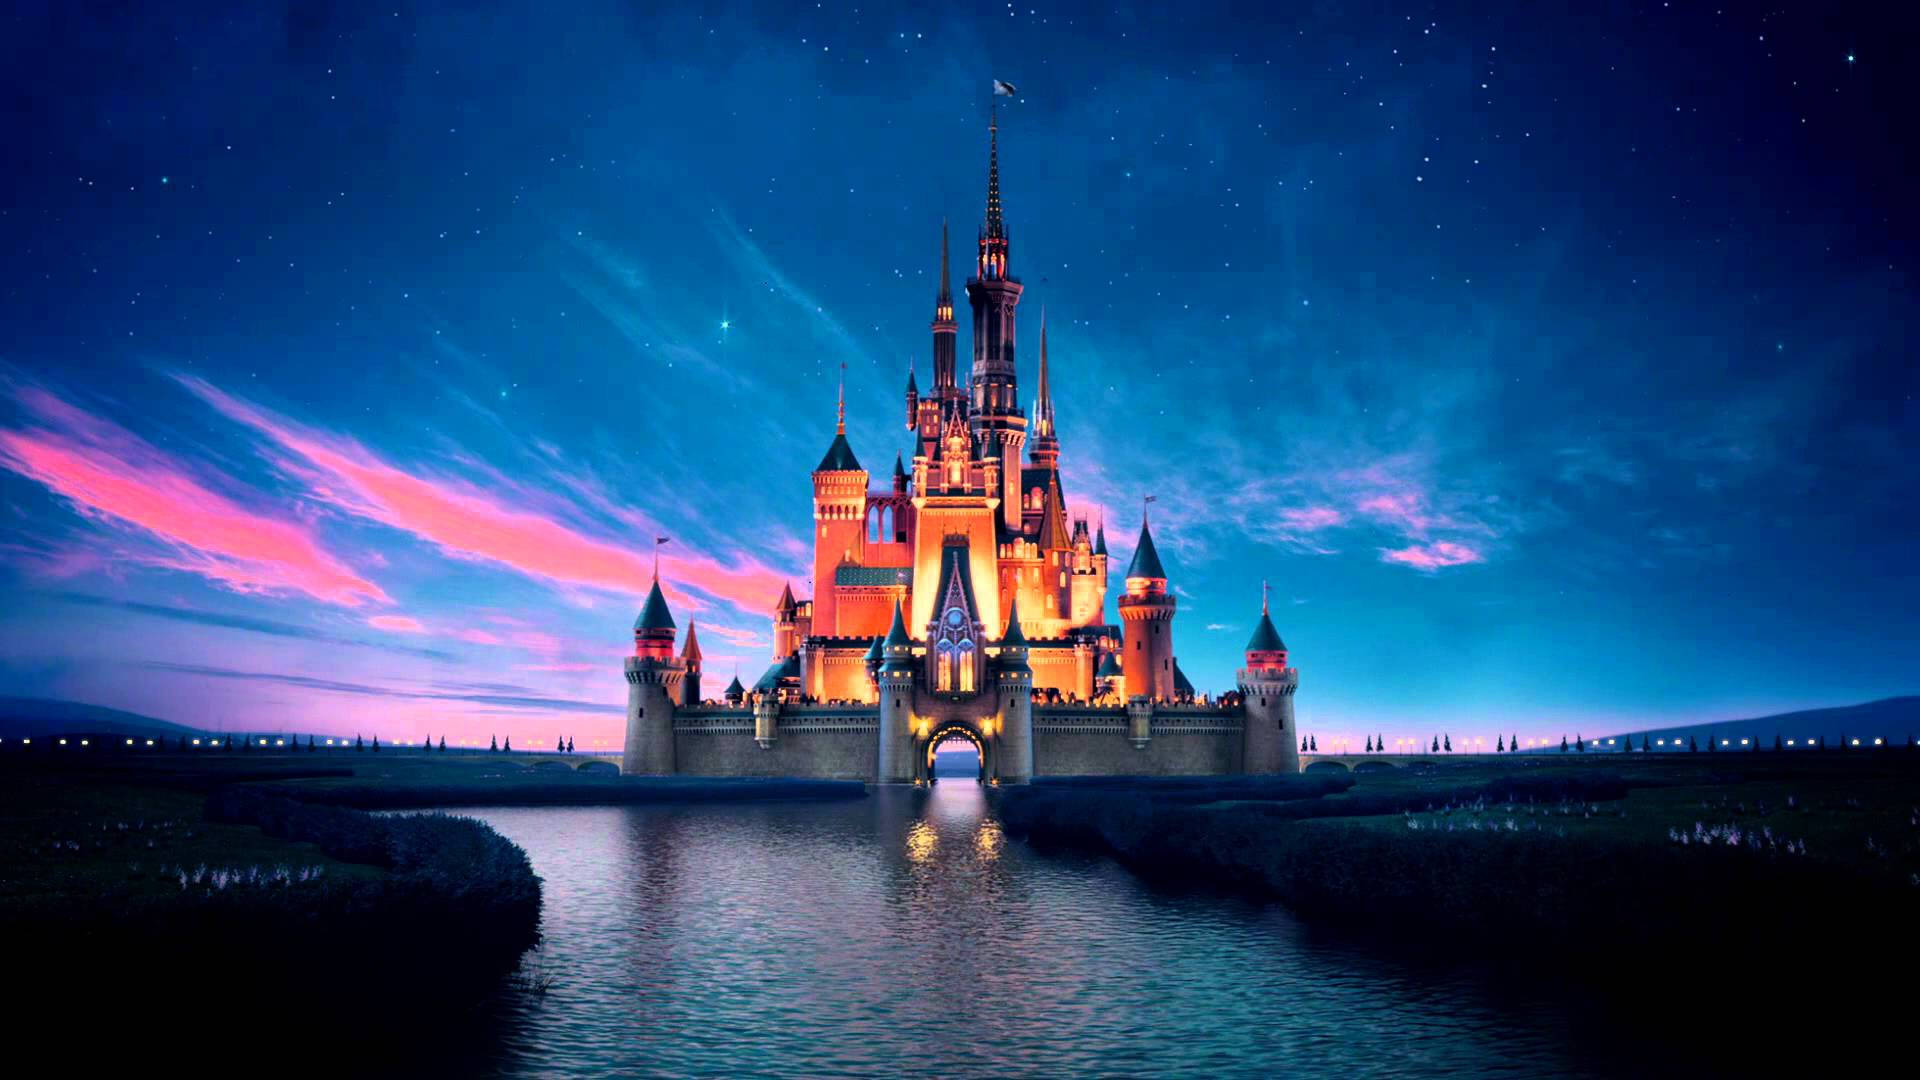 Animated Disney Castle